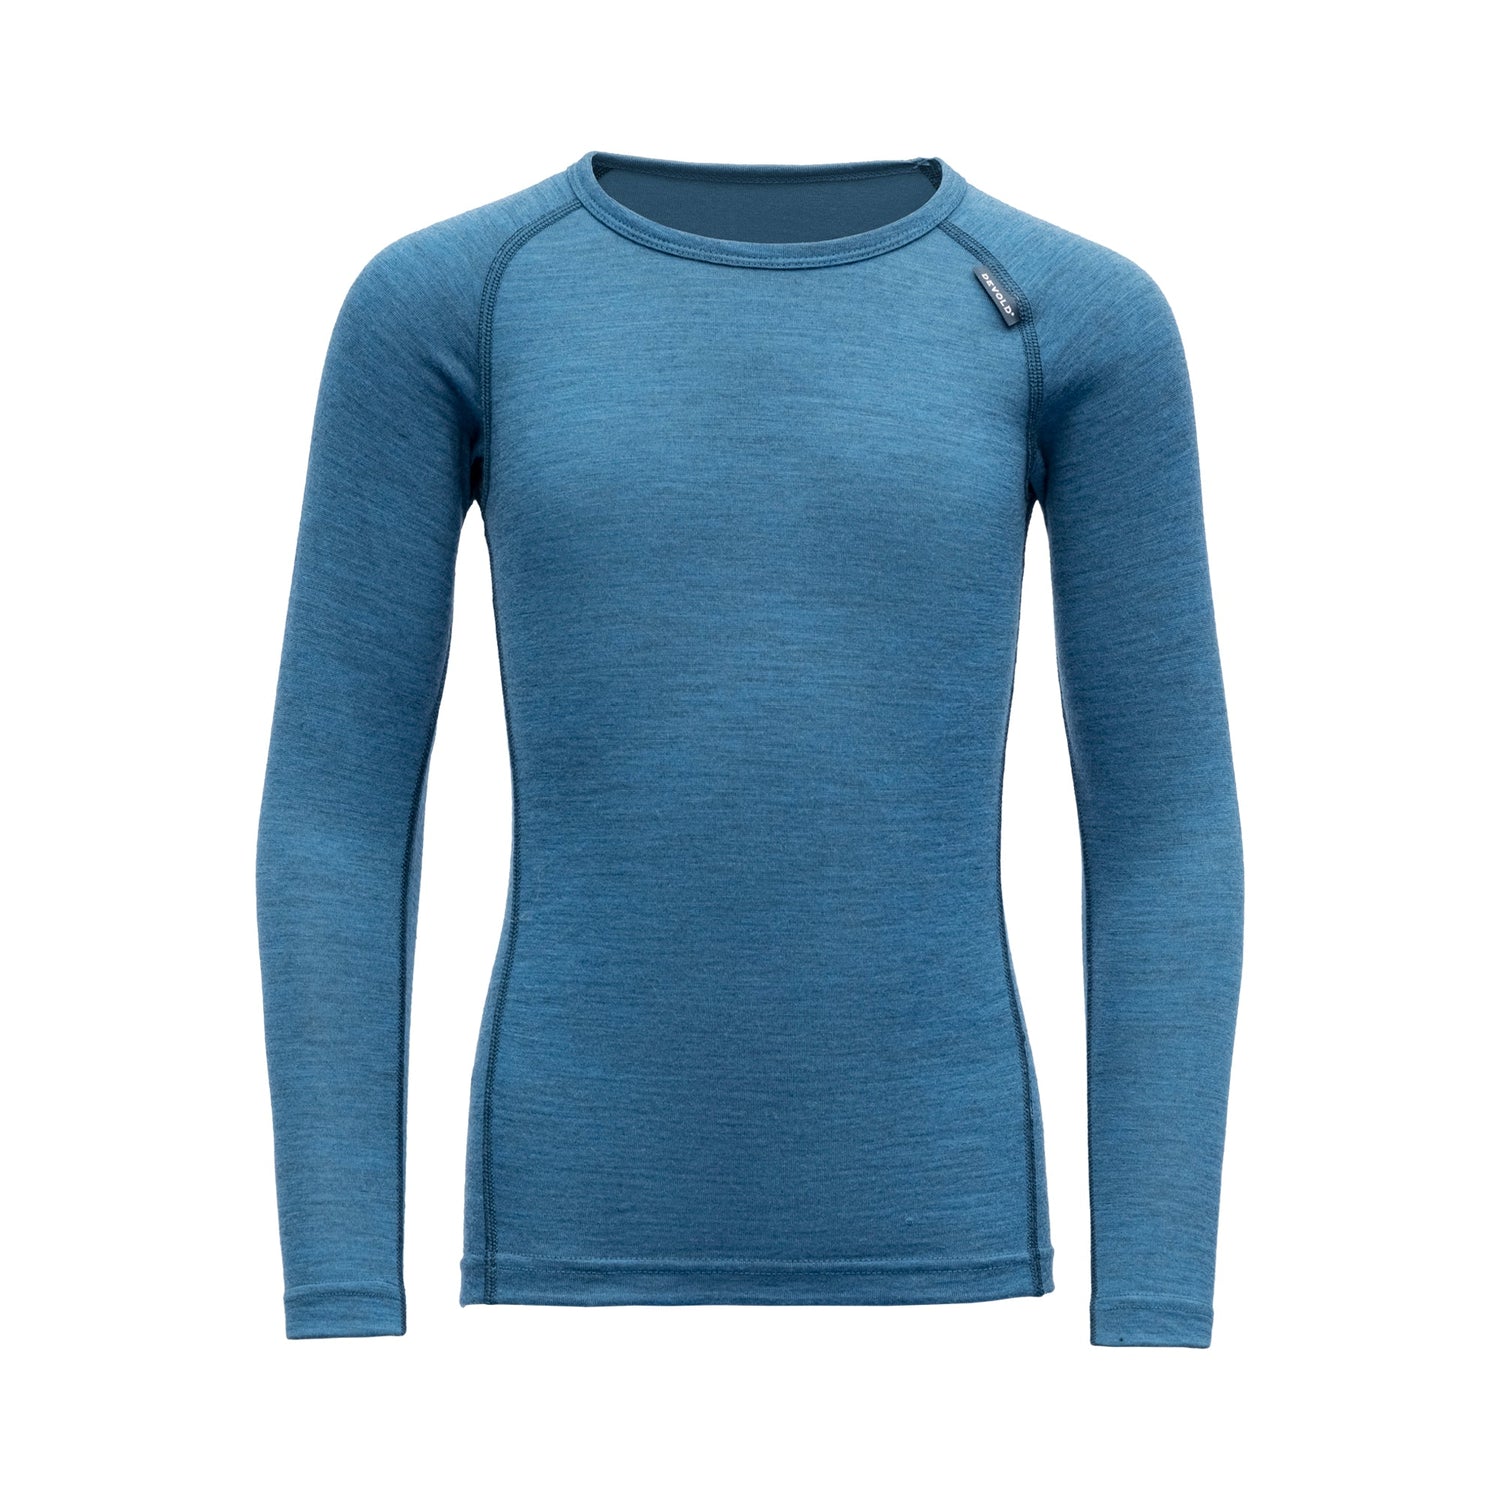 Devold Kids Breeze L/S Shirt - 100% Merino Wool Blue Melange Shirt